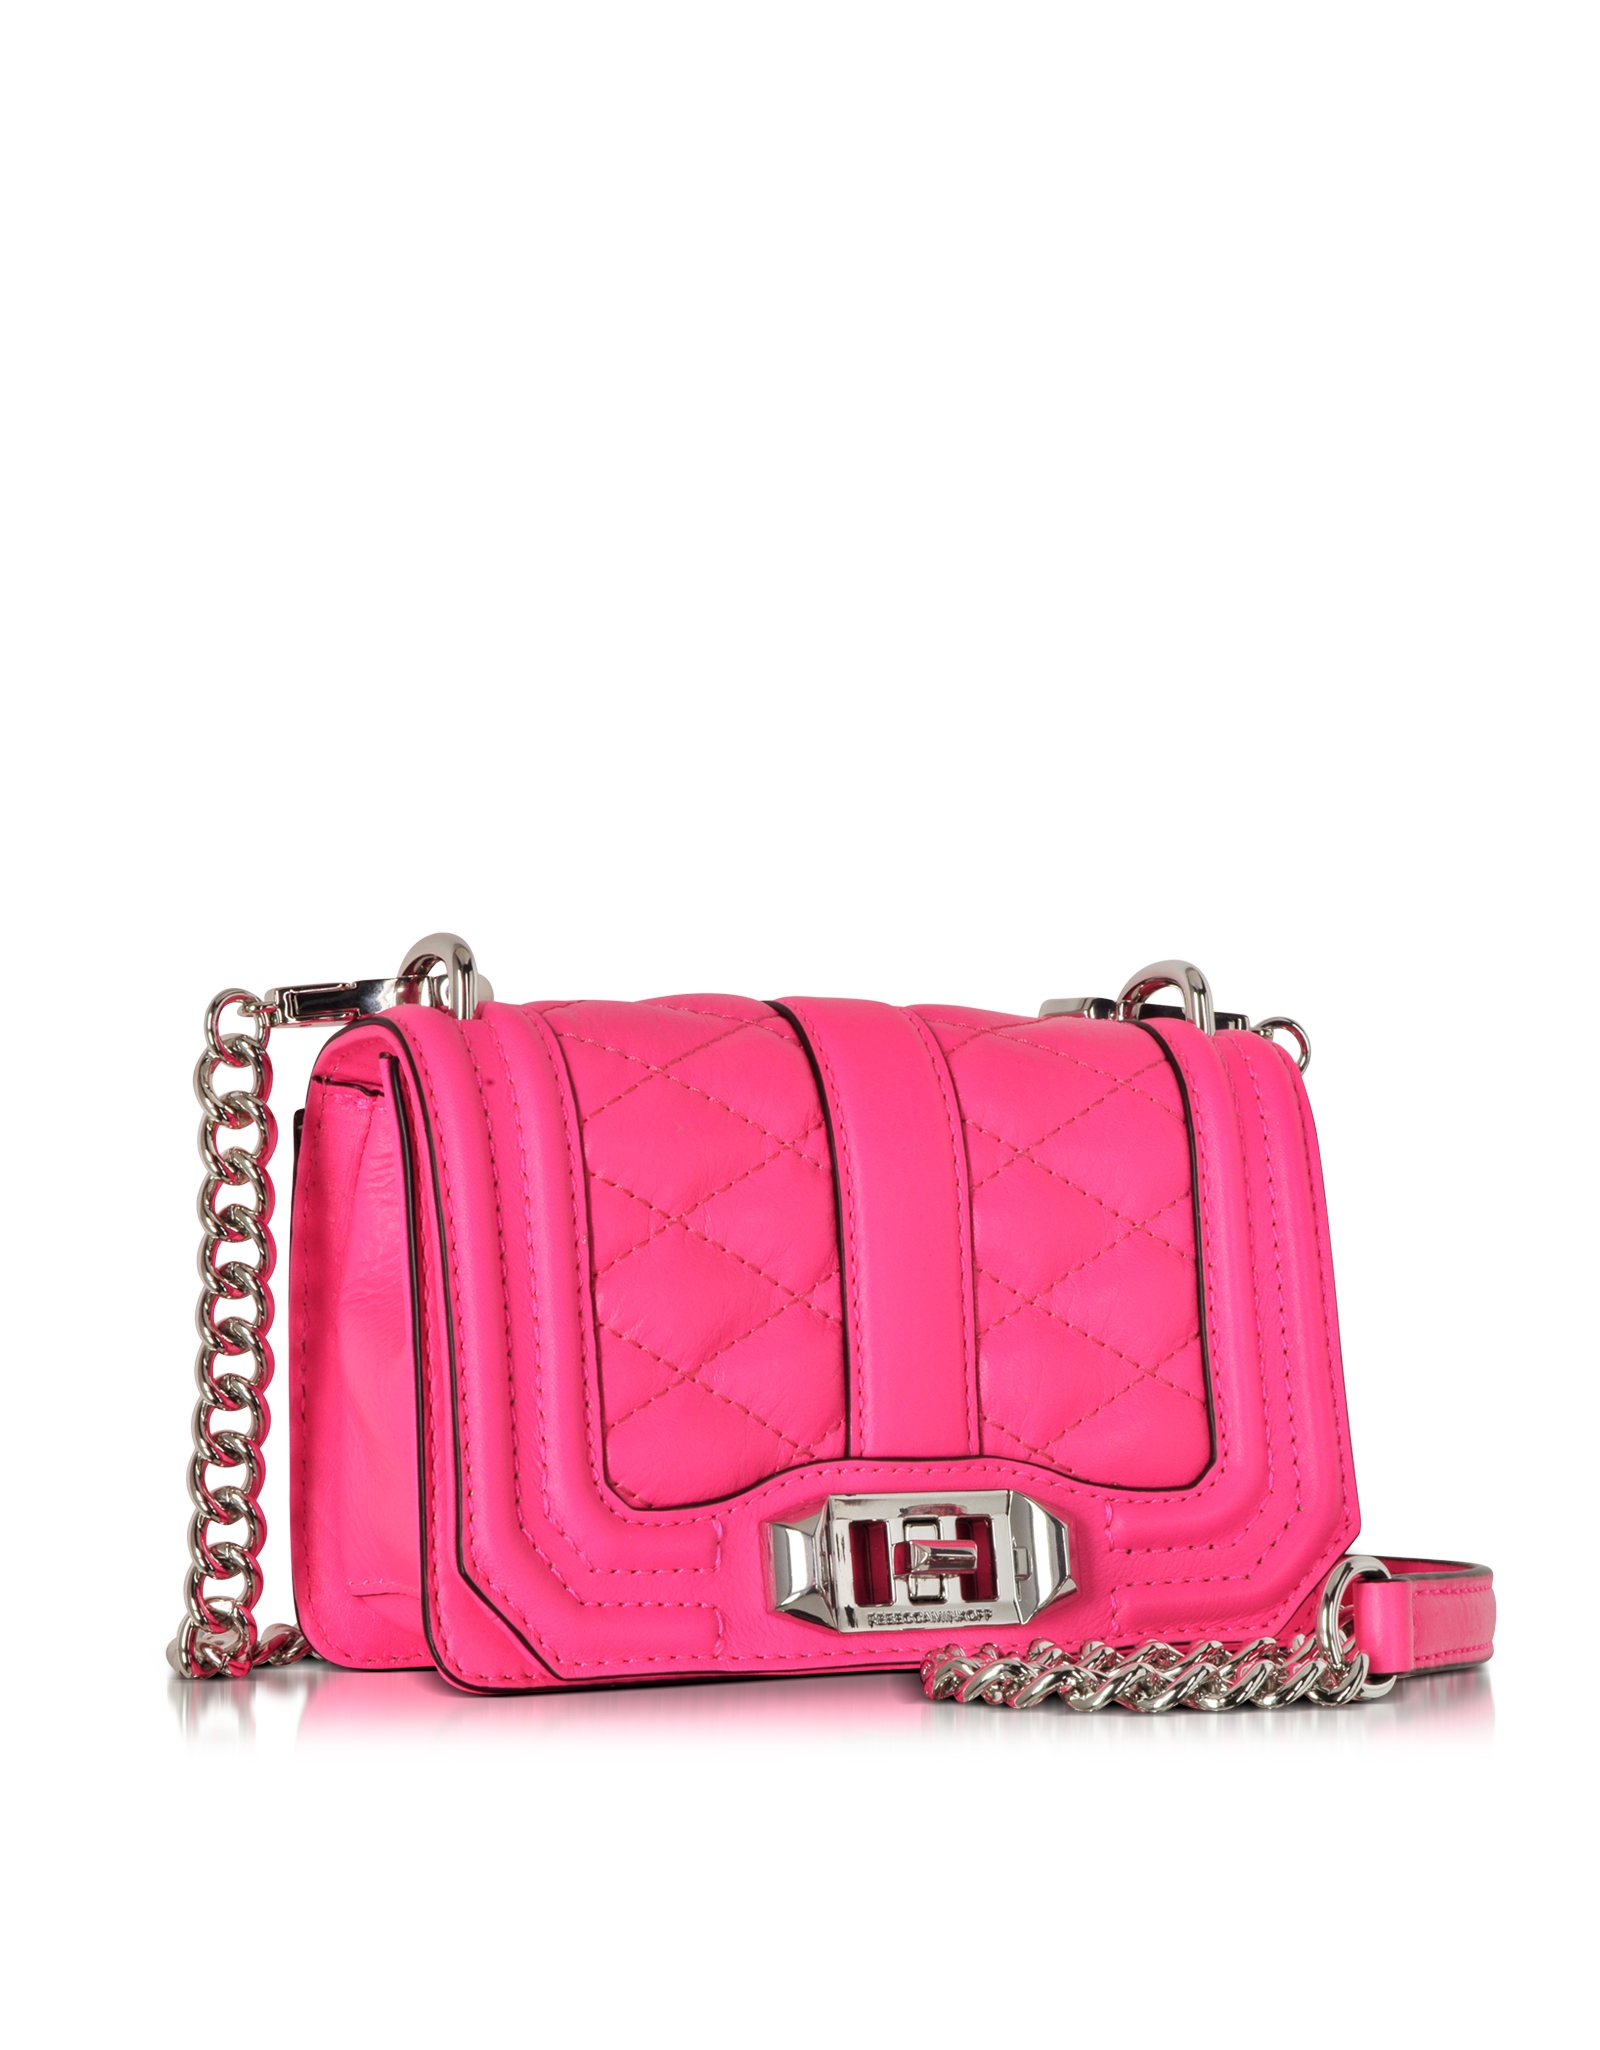 Lyst - Rebecca Minkoff Electric Pink Leather Mini Love Crossbody Bag in Pink